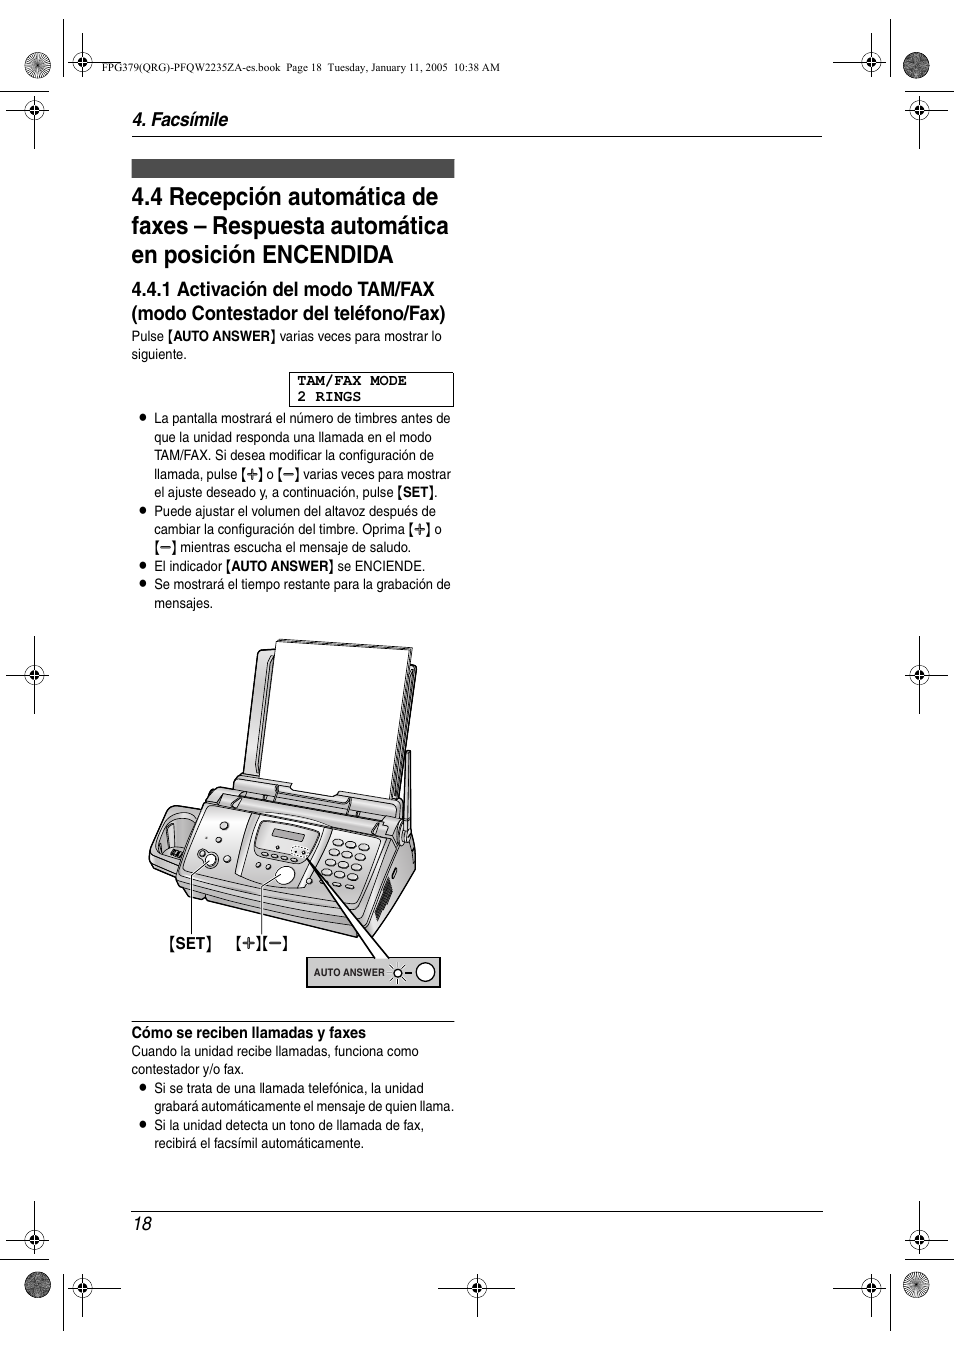 Facsímile 18 | Panasonic KXFPG378 Manual del usuario | Página 18 / 28